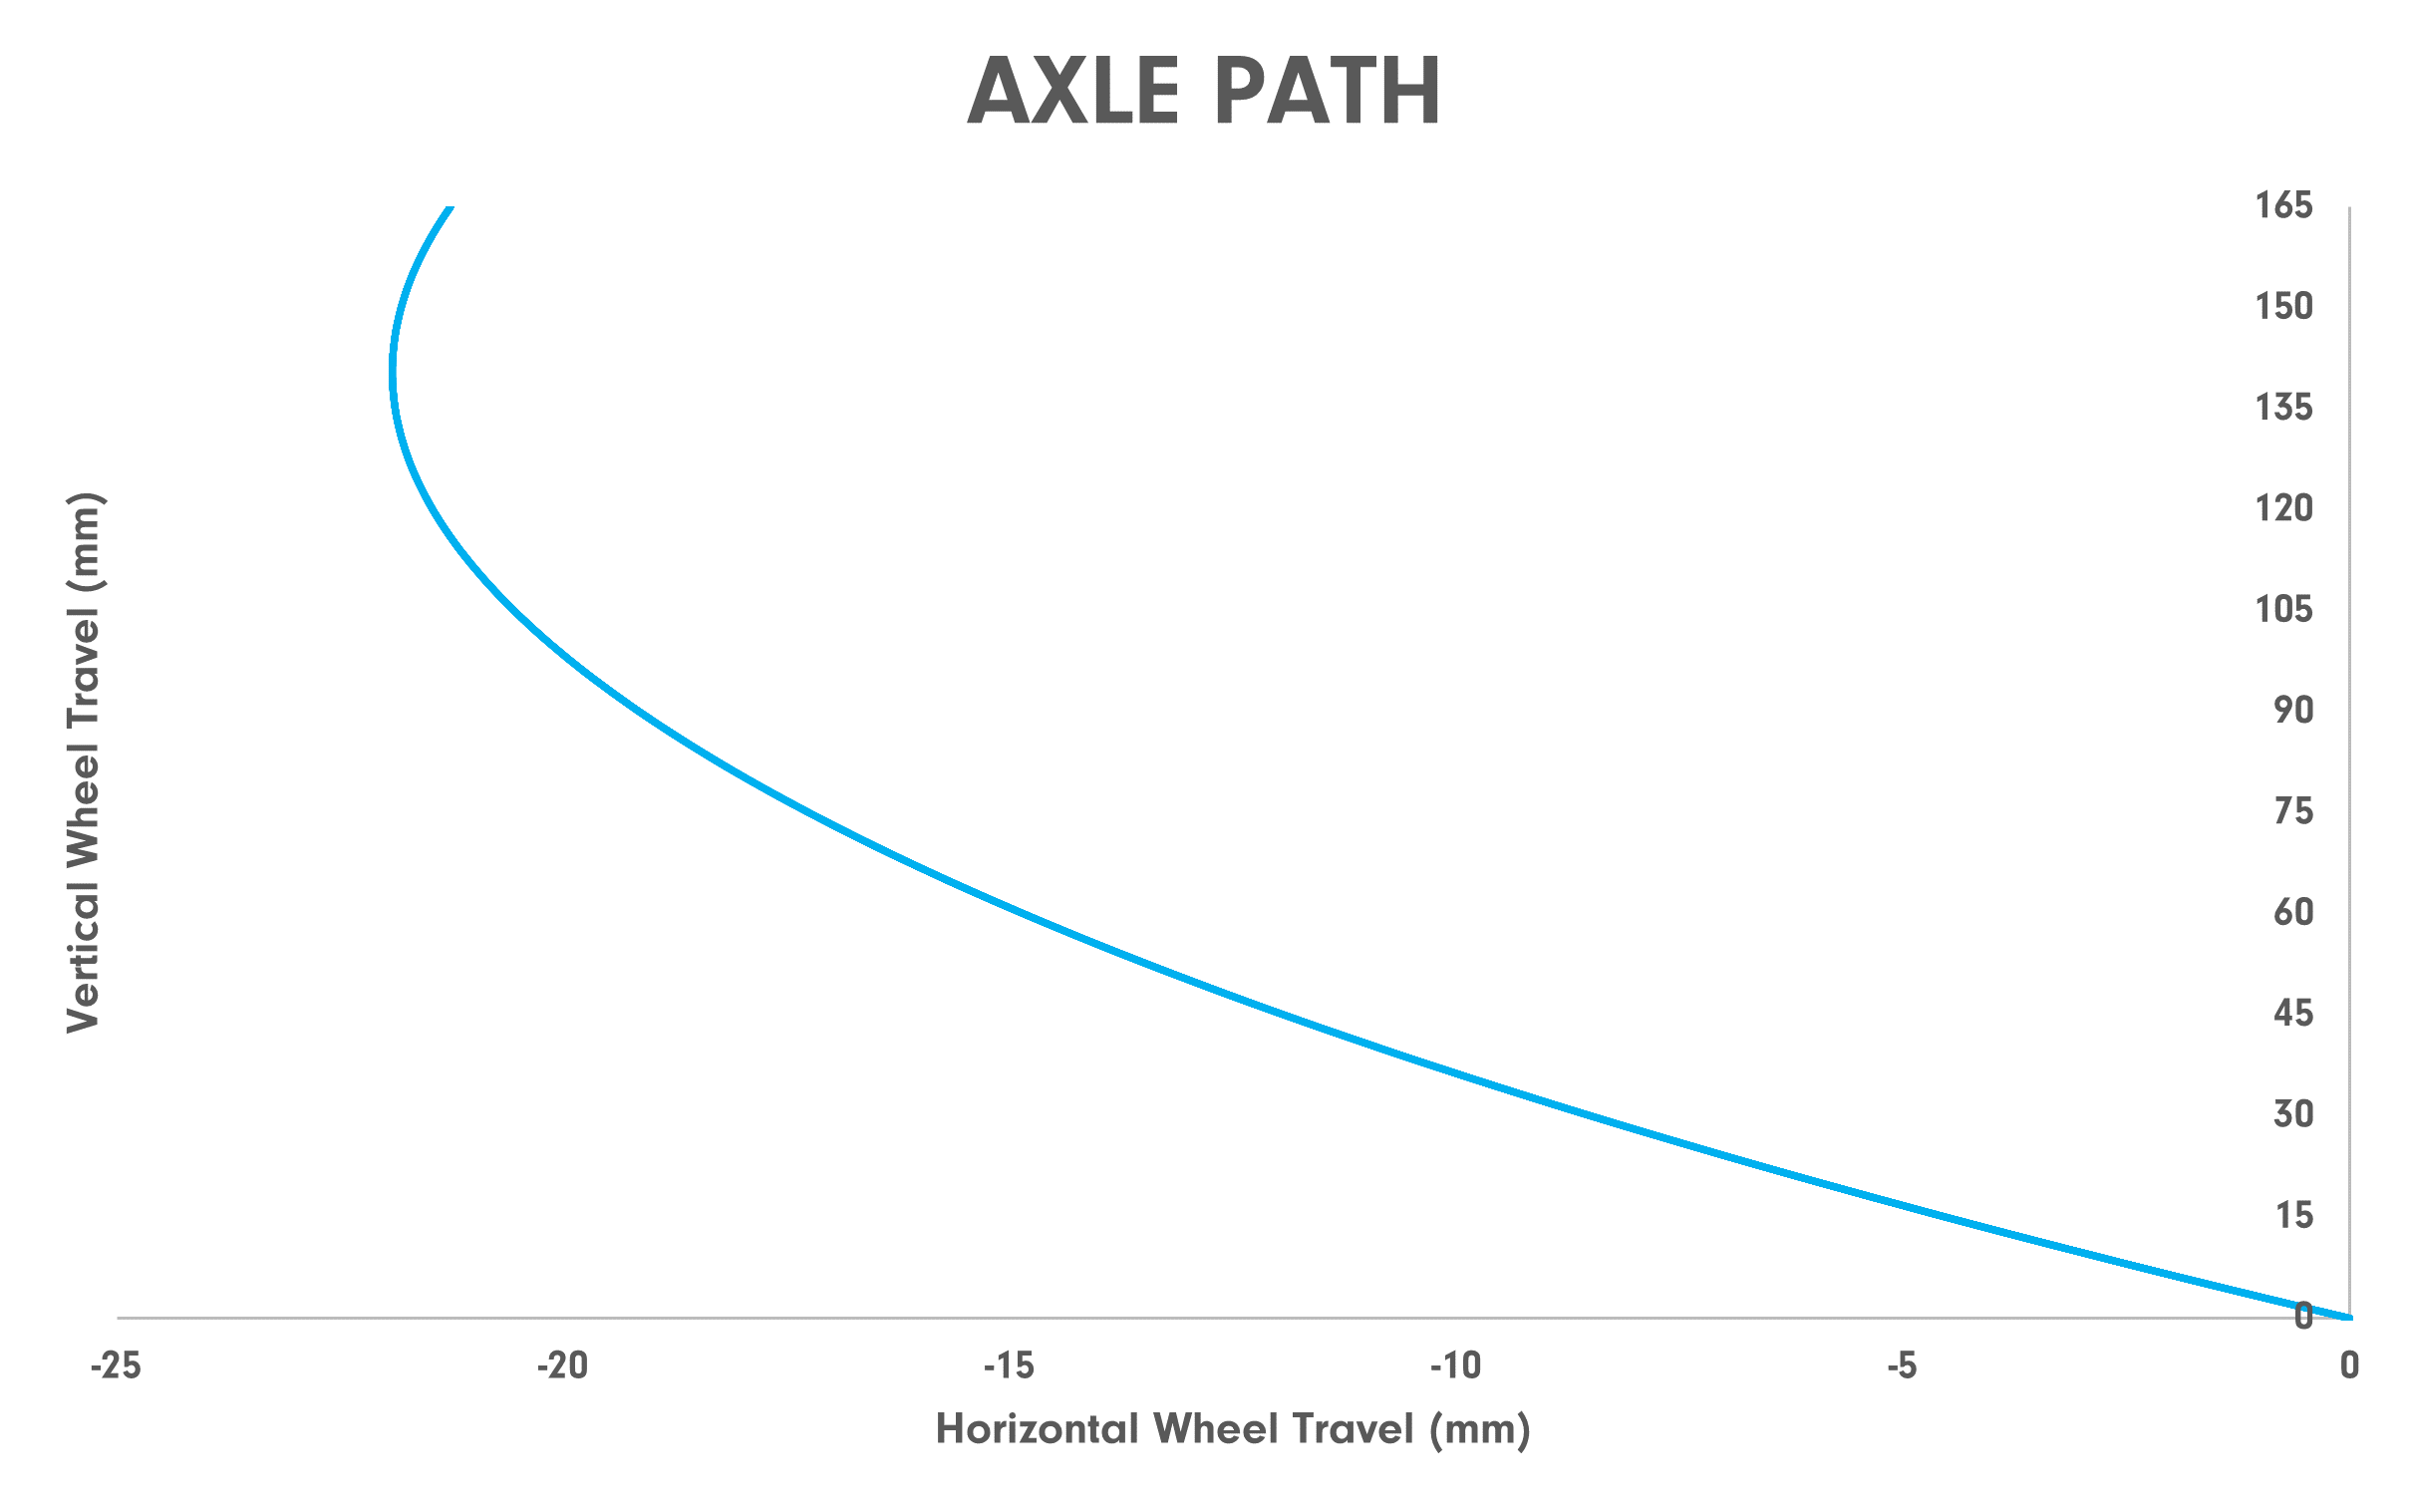 Axle path